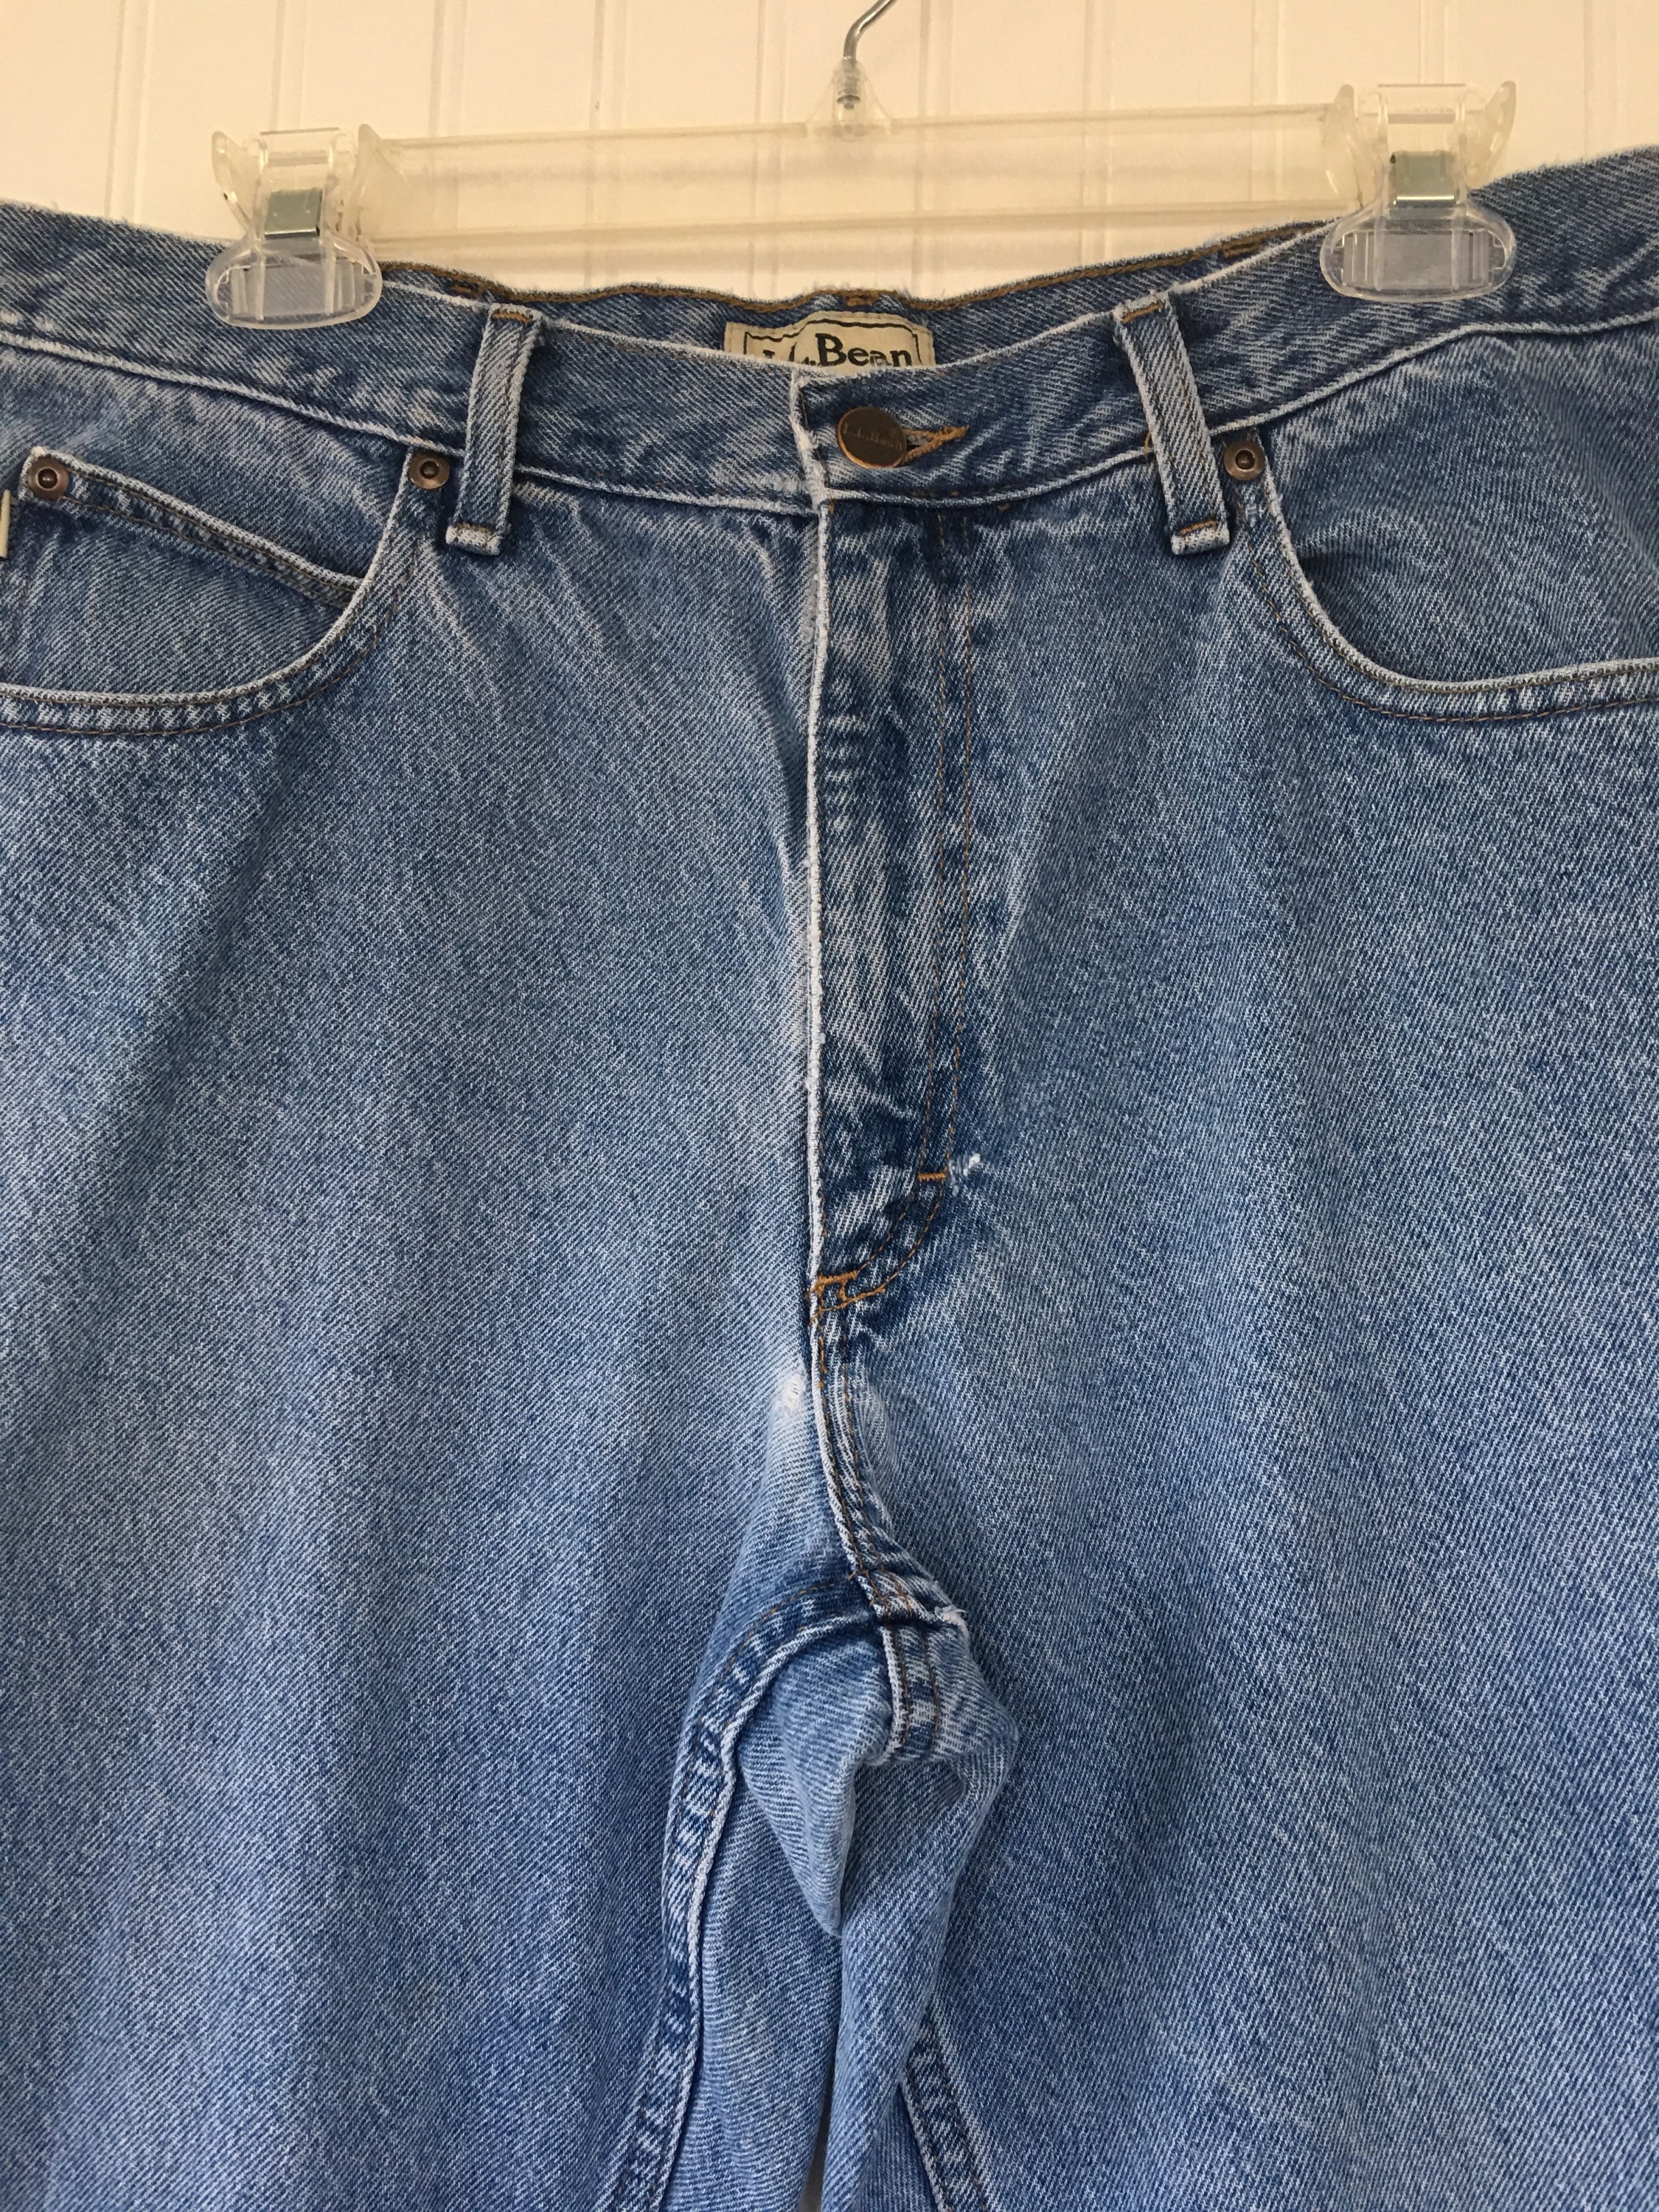 Vintage 90s LL Bean Denim Blue Jeans Worn Size womens 34 x 29 Large L ...